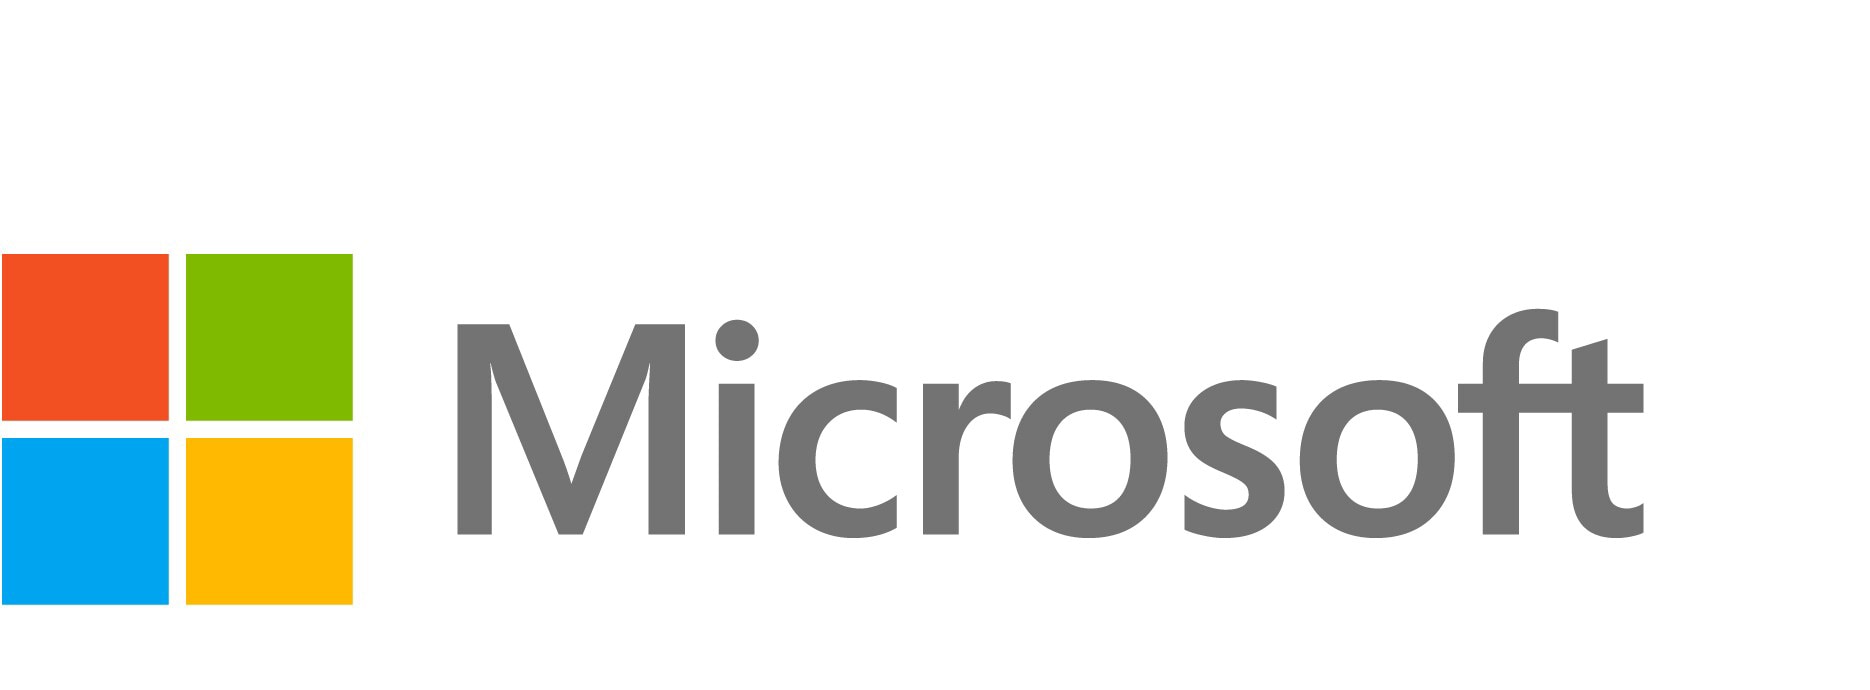 microsoft logo vector